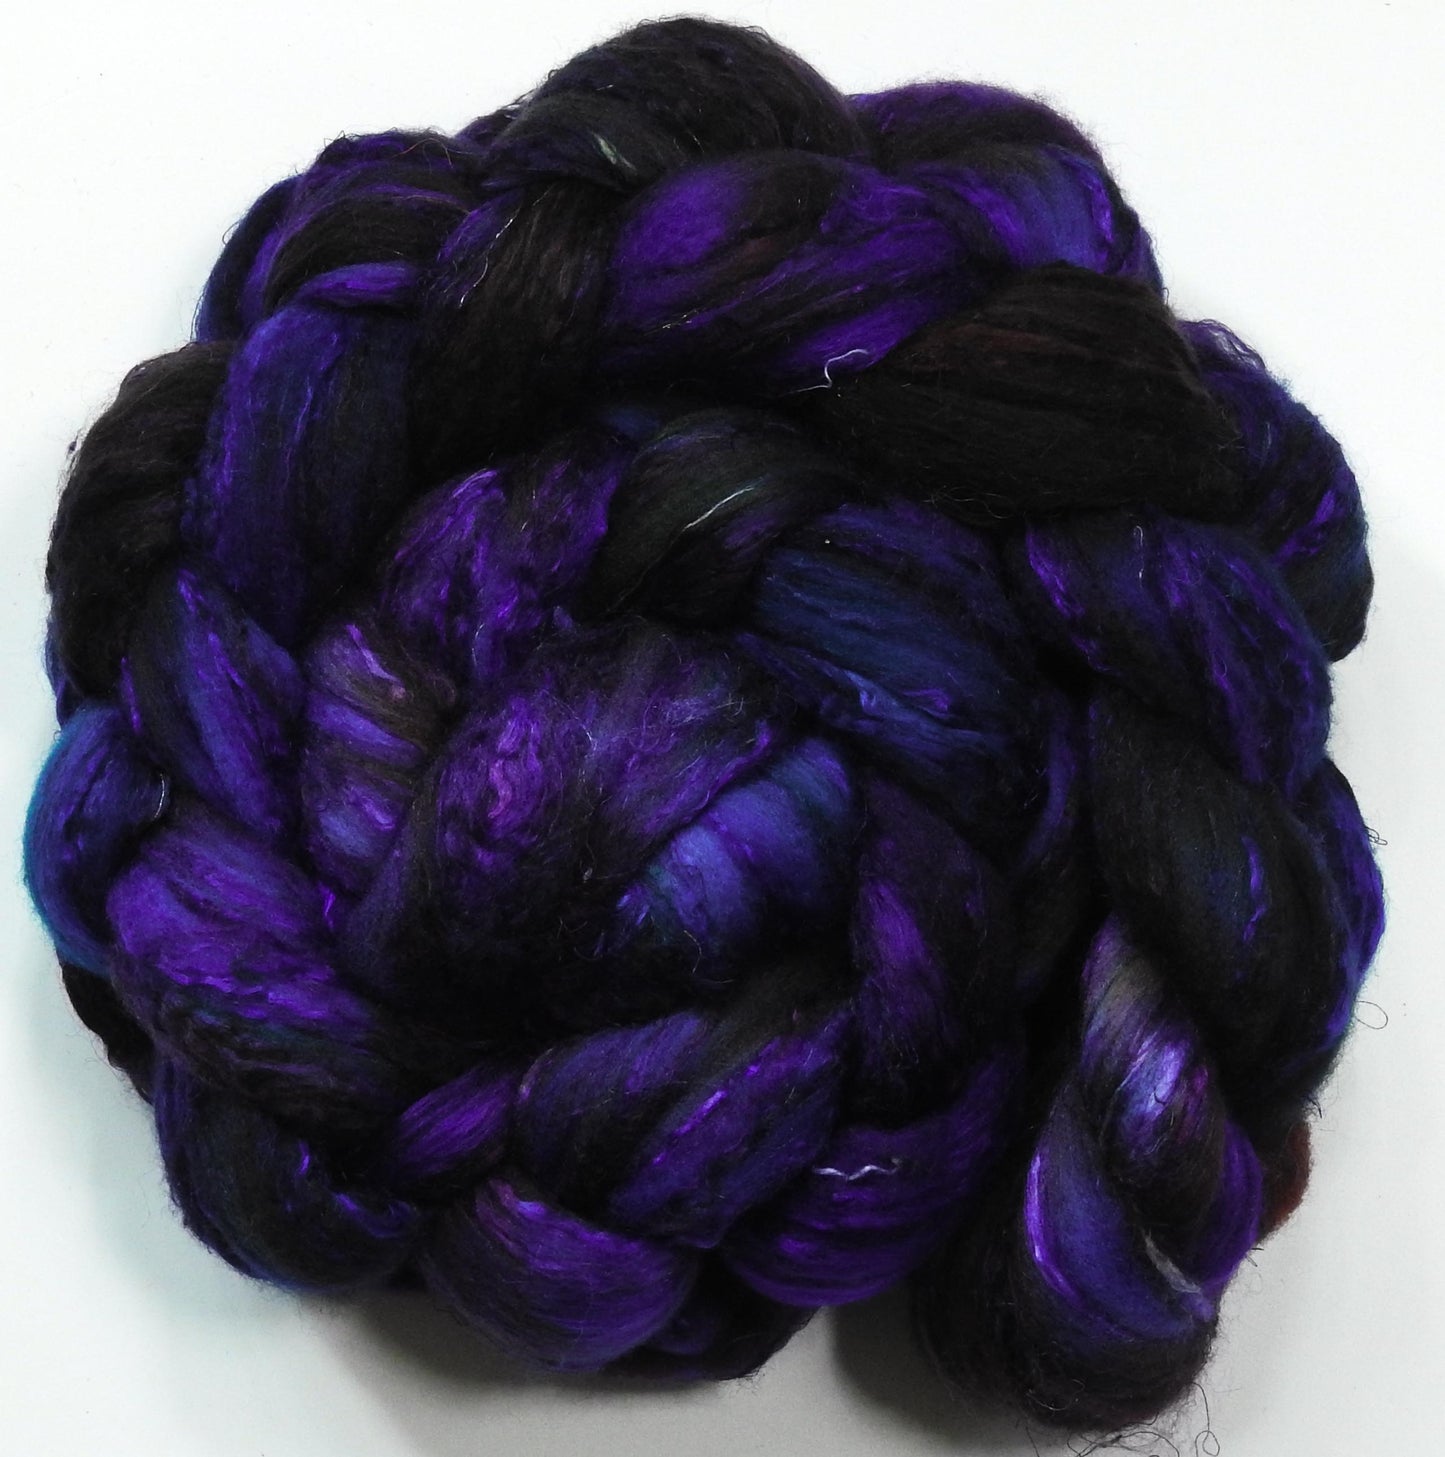 Nightfall- Fusion Series (3.4 oz) -Batt in a Braid #39- Falkland Merino/ Mulberry Silk / Sari Silk (50/25/25)